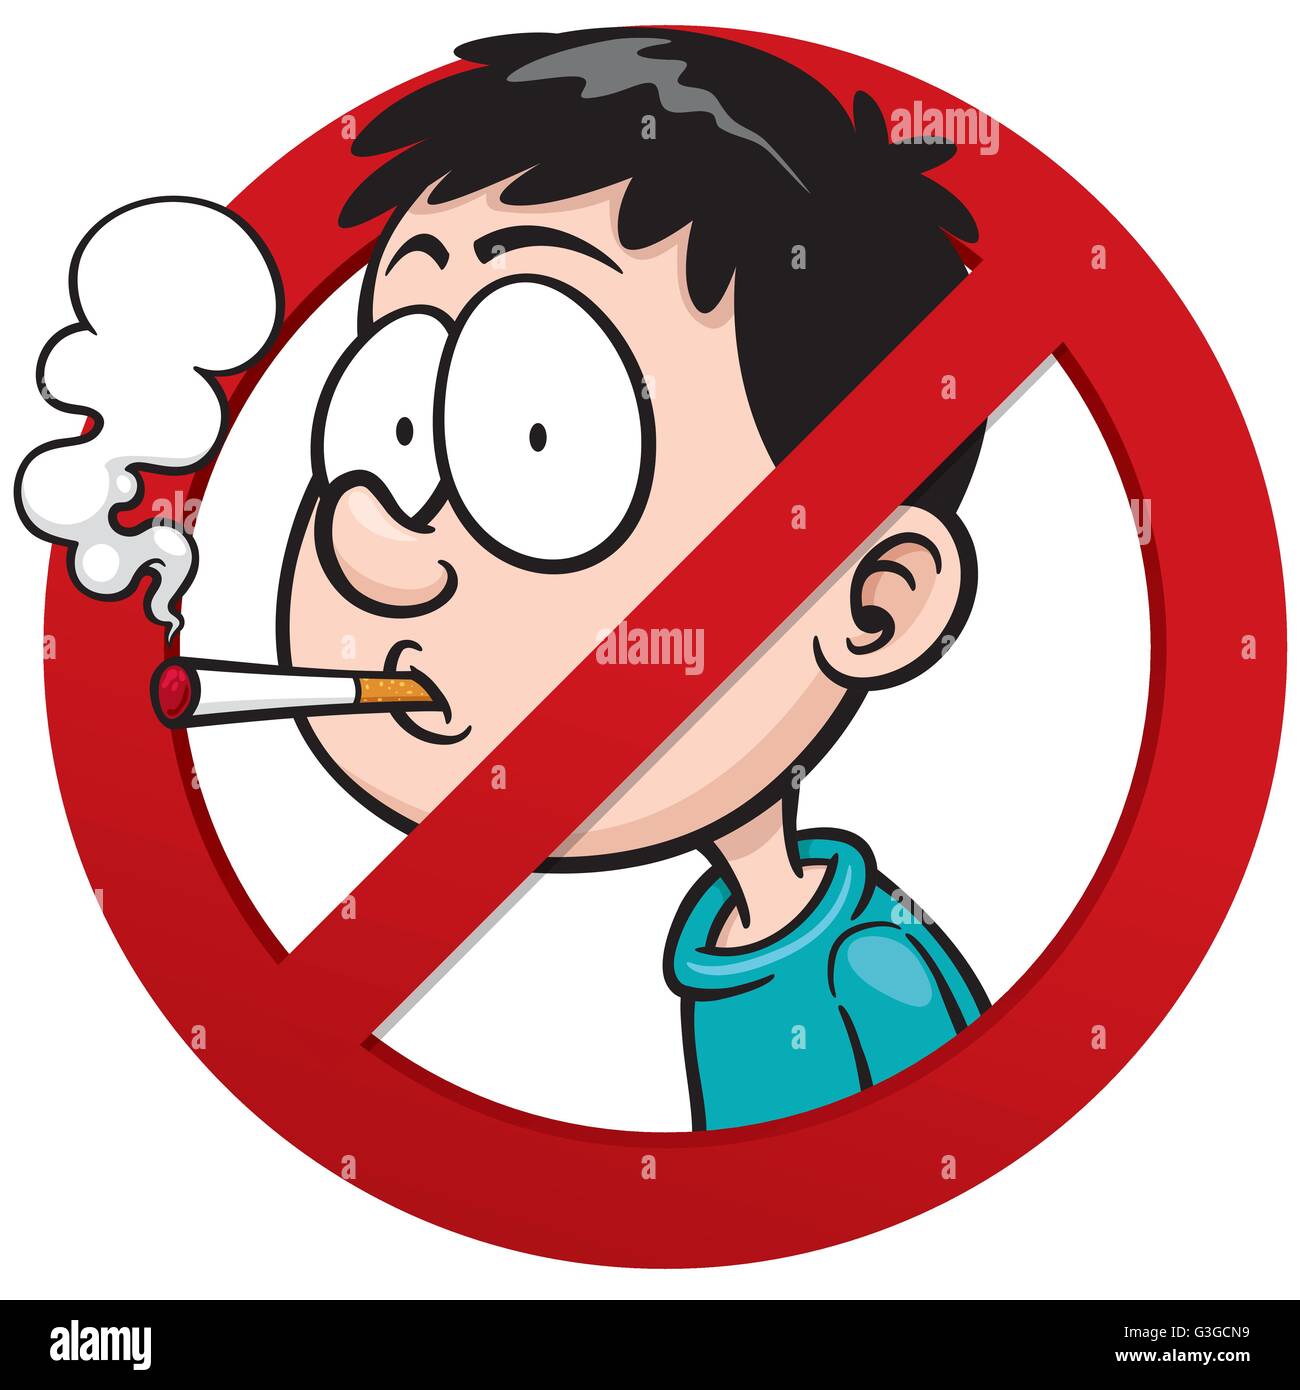 Vector illustration of No smoking sign Stock Vector